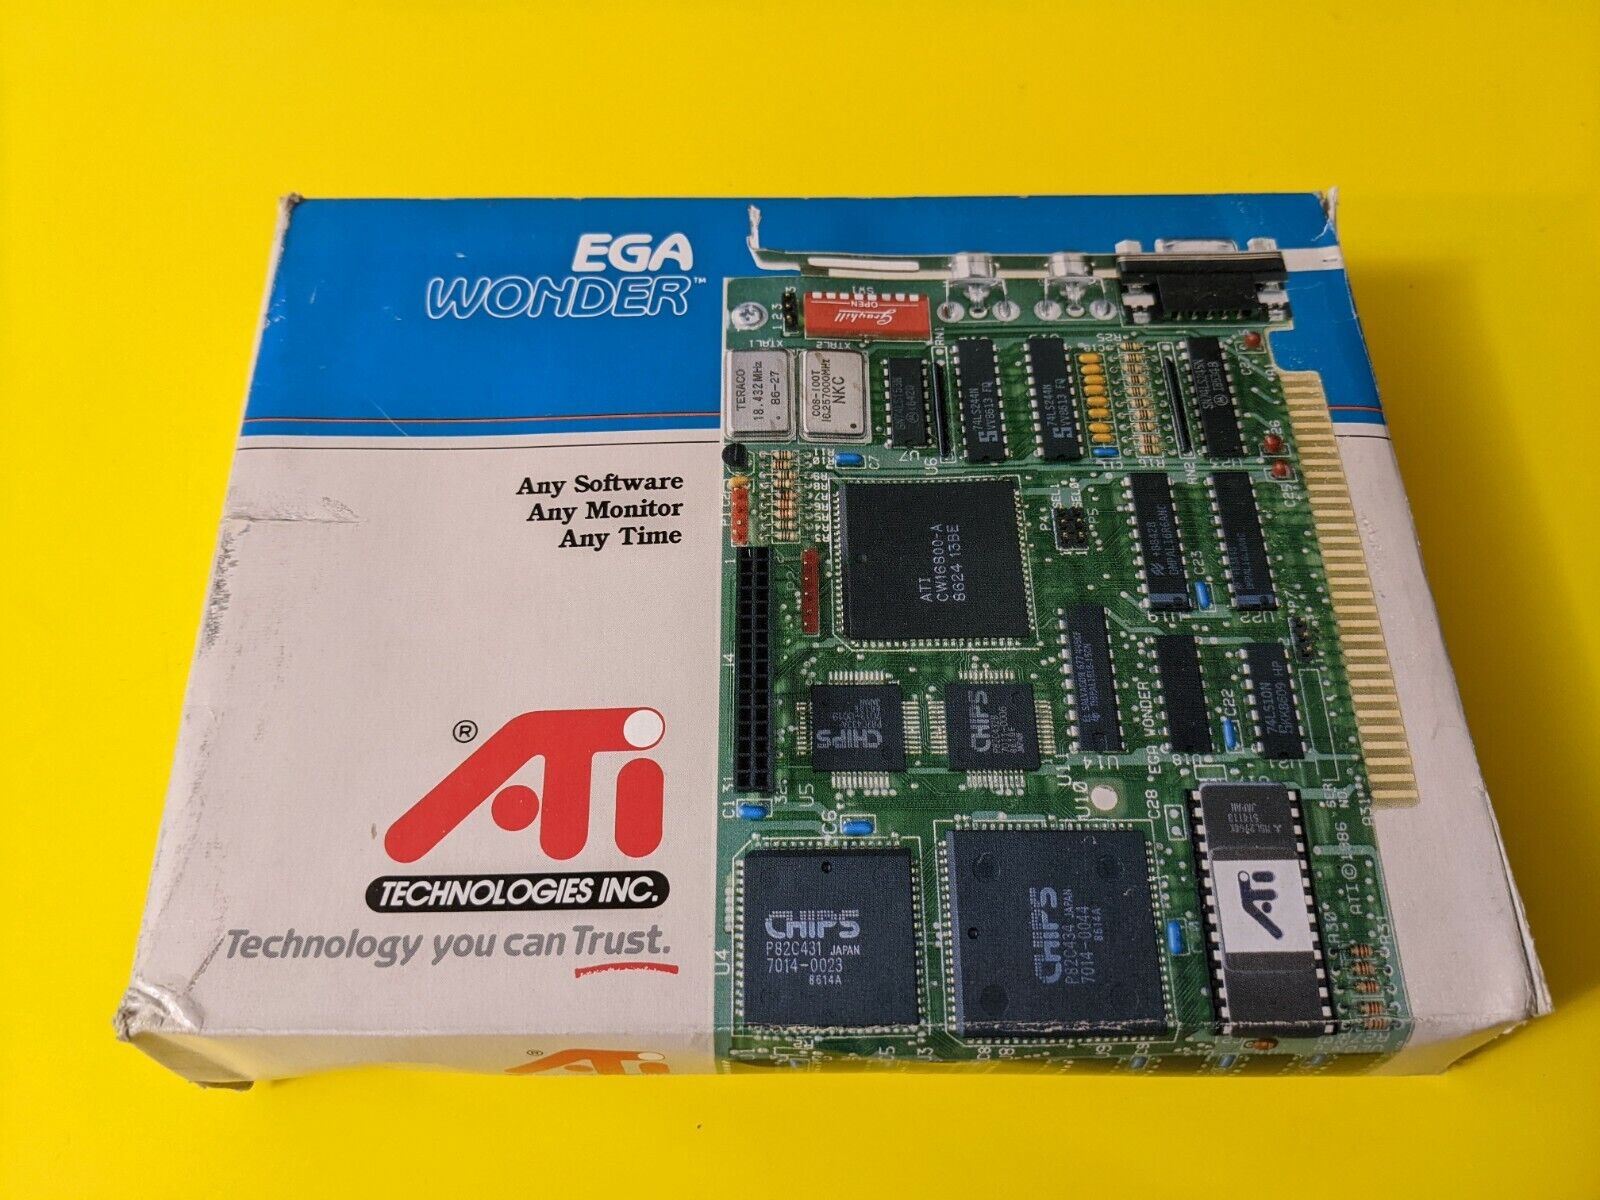 Vintage Boxed ATI EGA Wonder 8-Bit ISA Video Graphics Card Version 1.04 1986